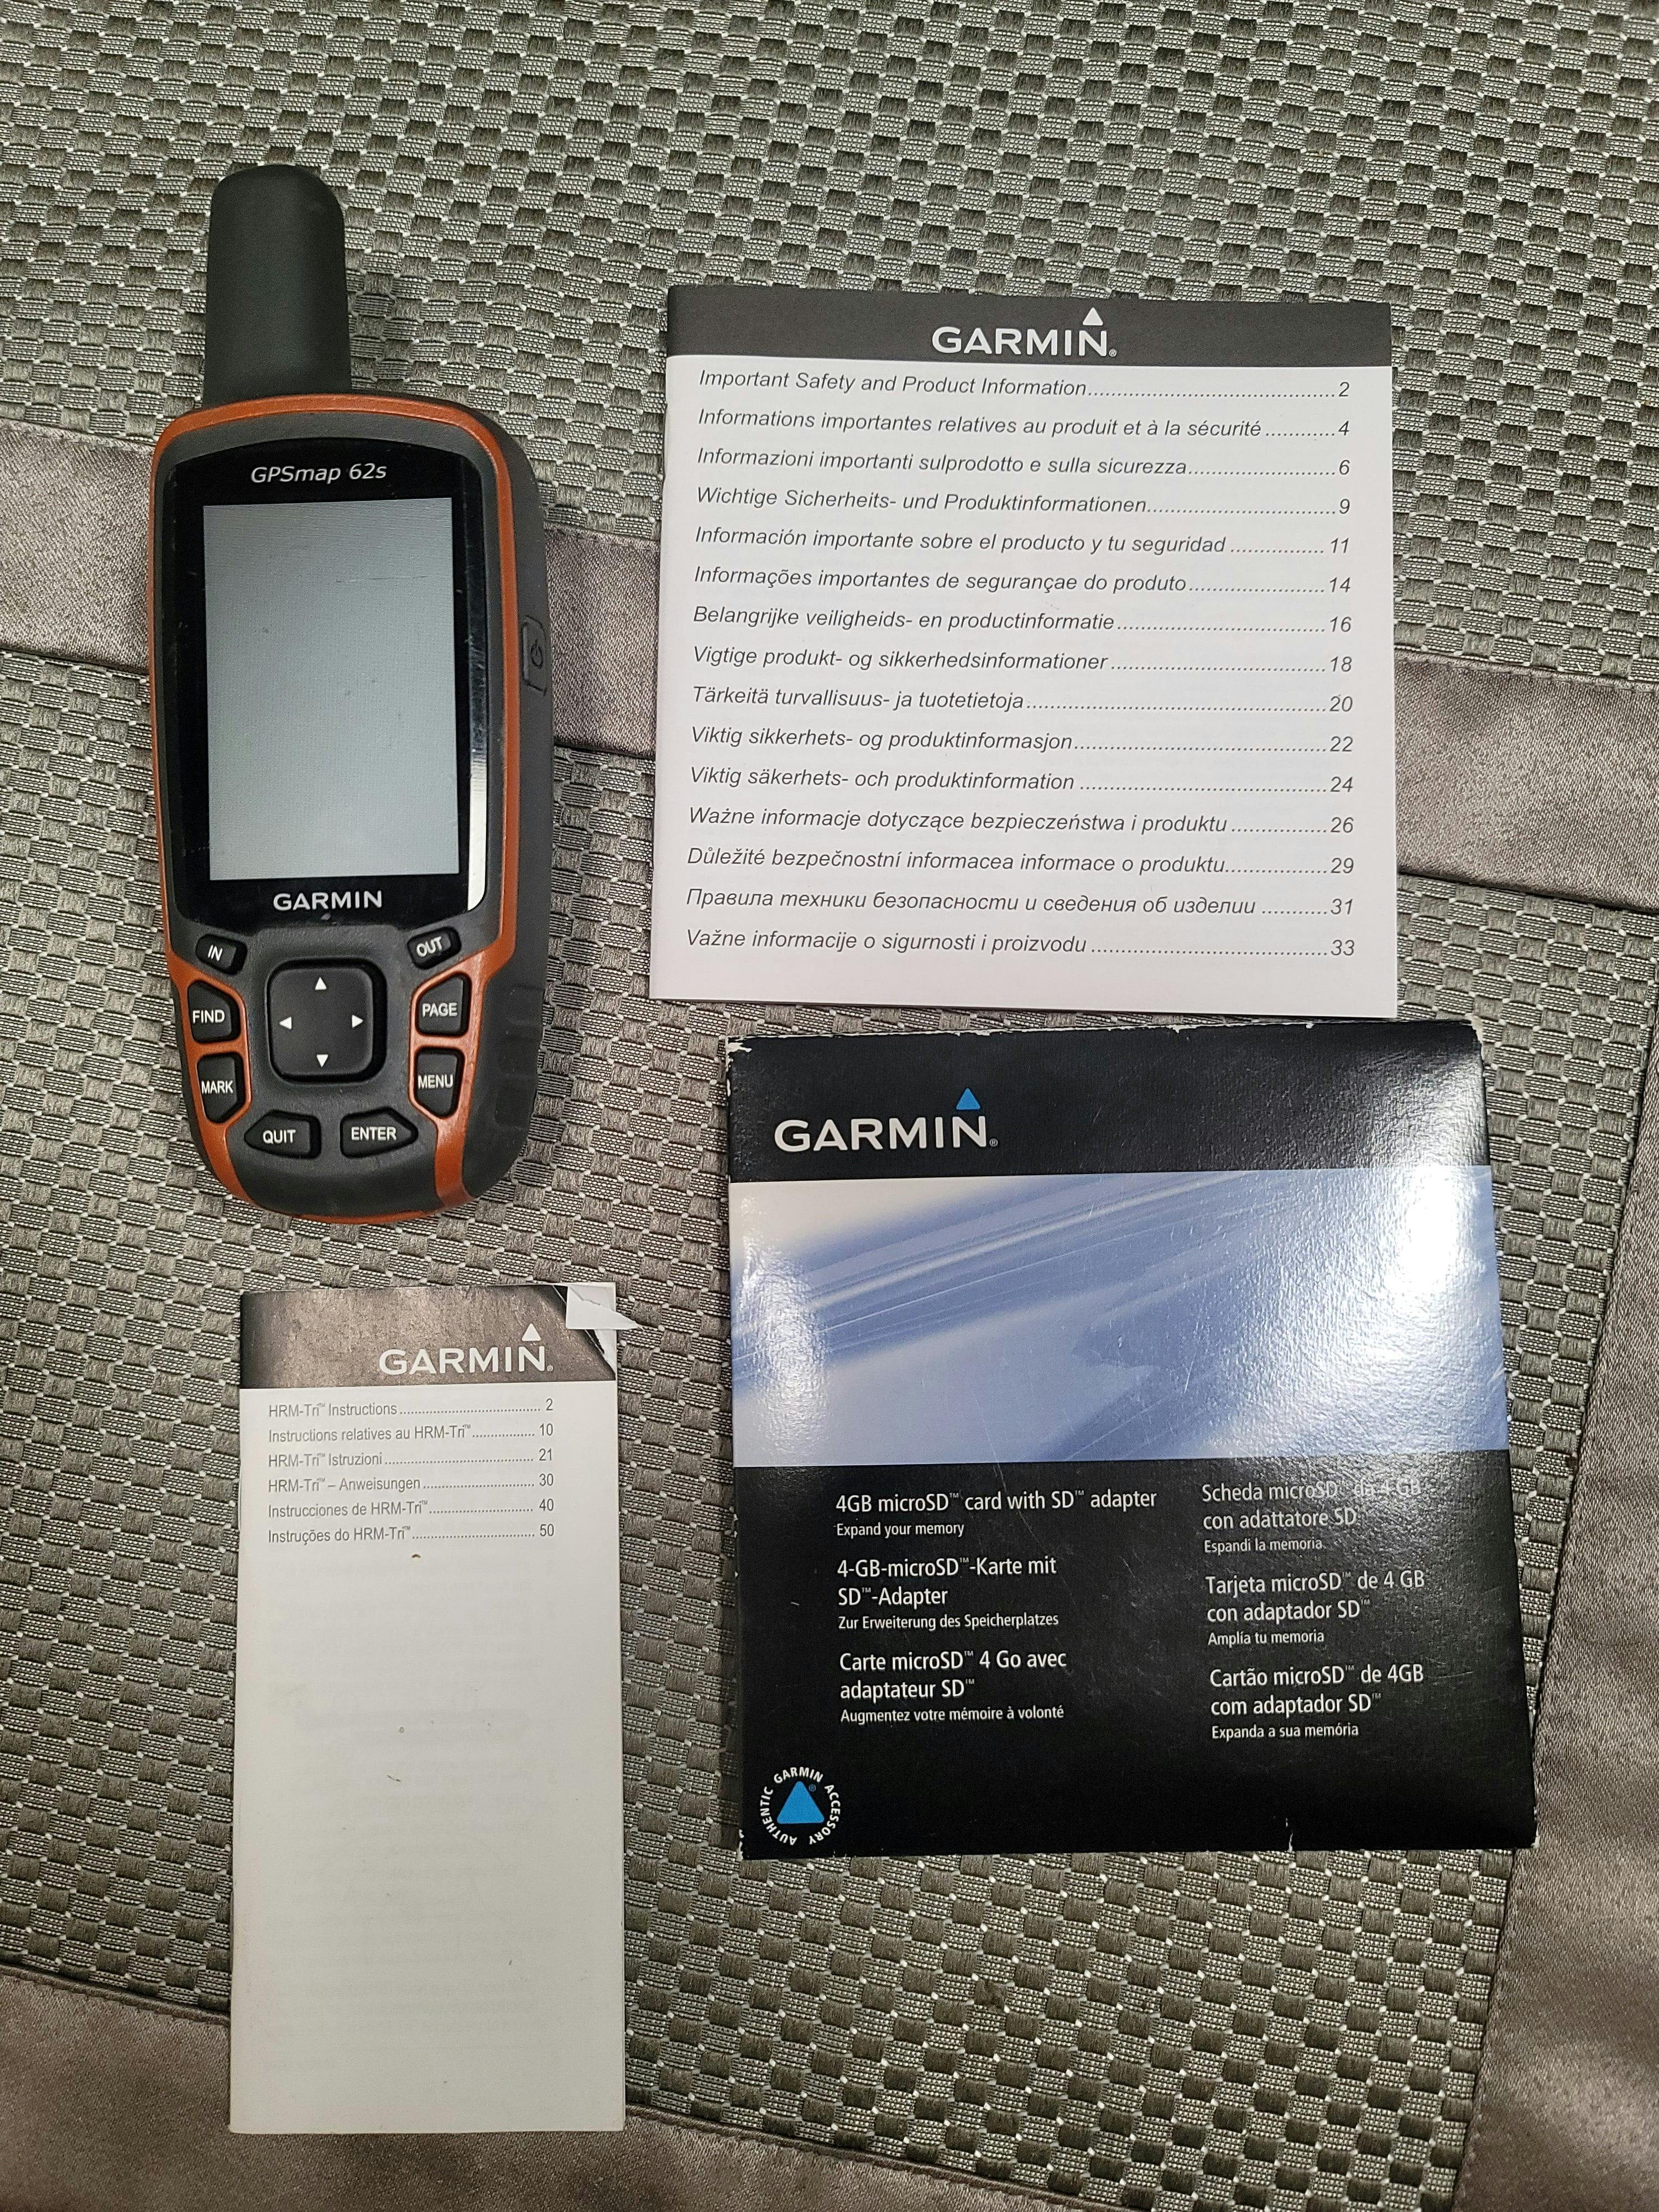  Garmin GPS Handheld Device 